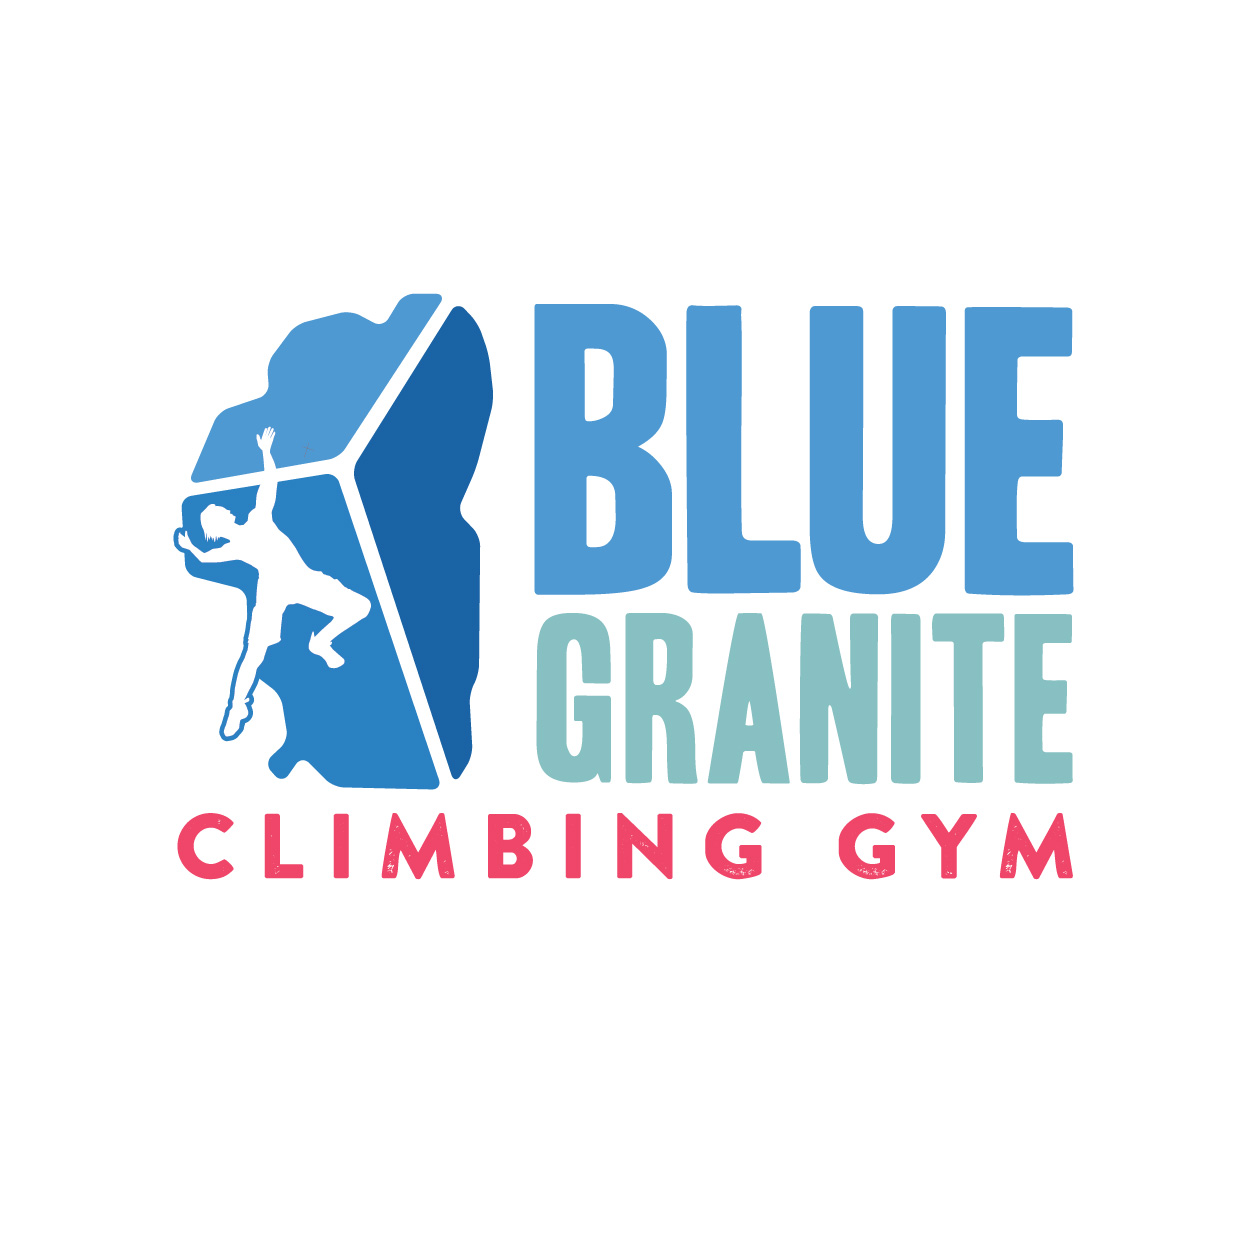 climbing gym logo design